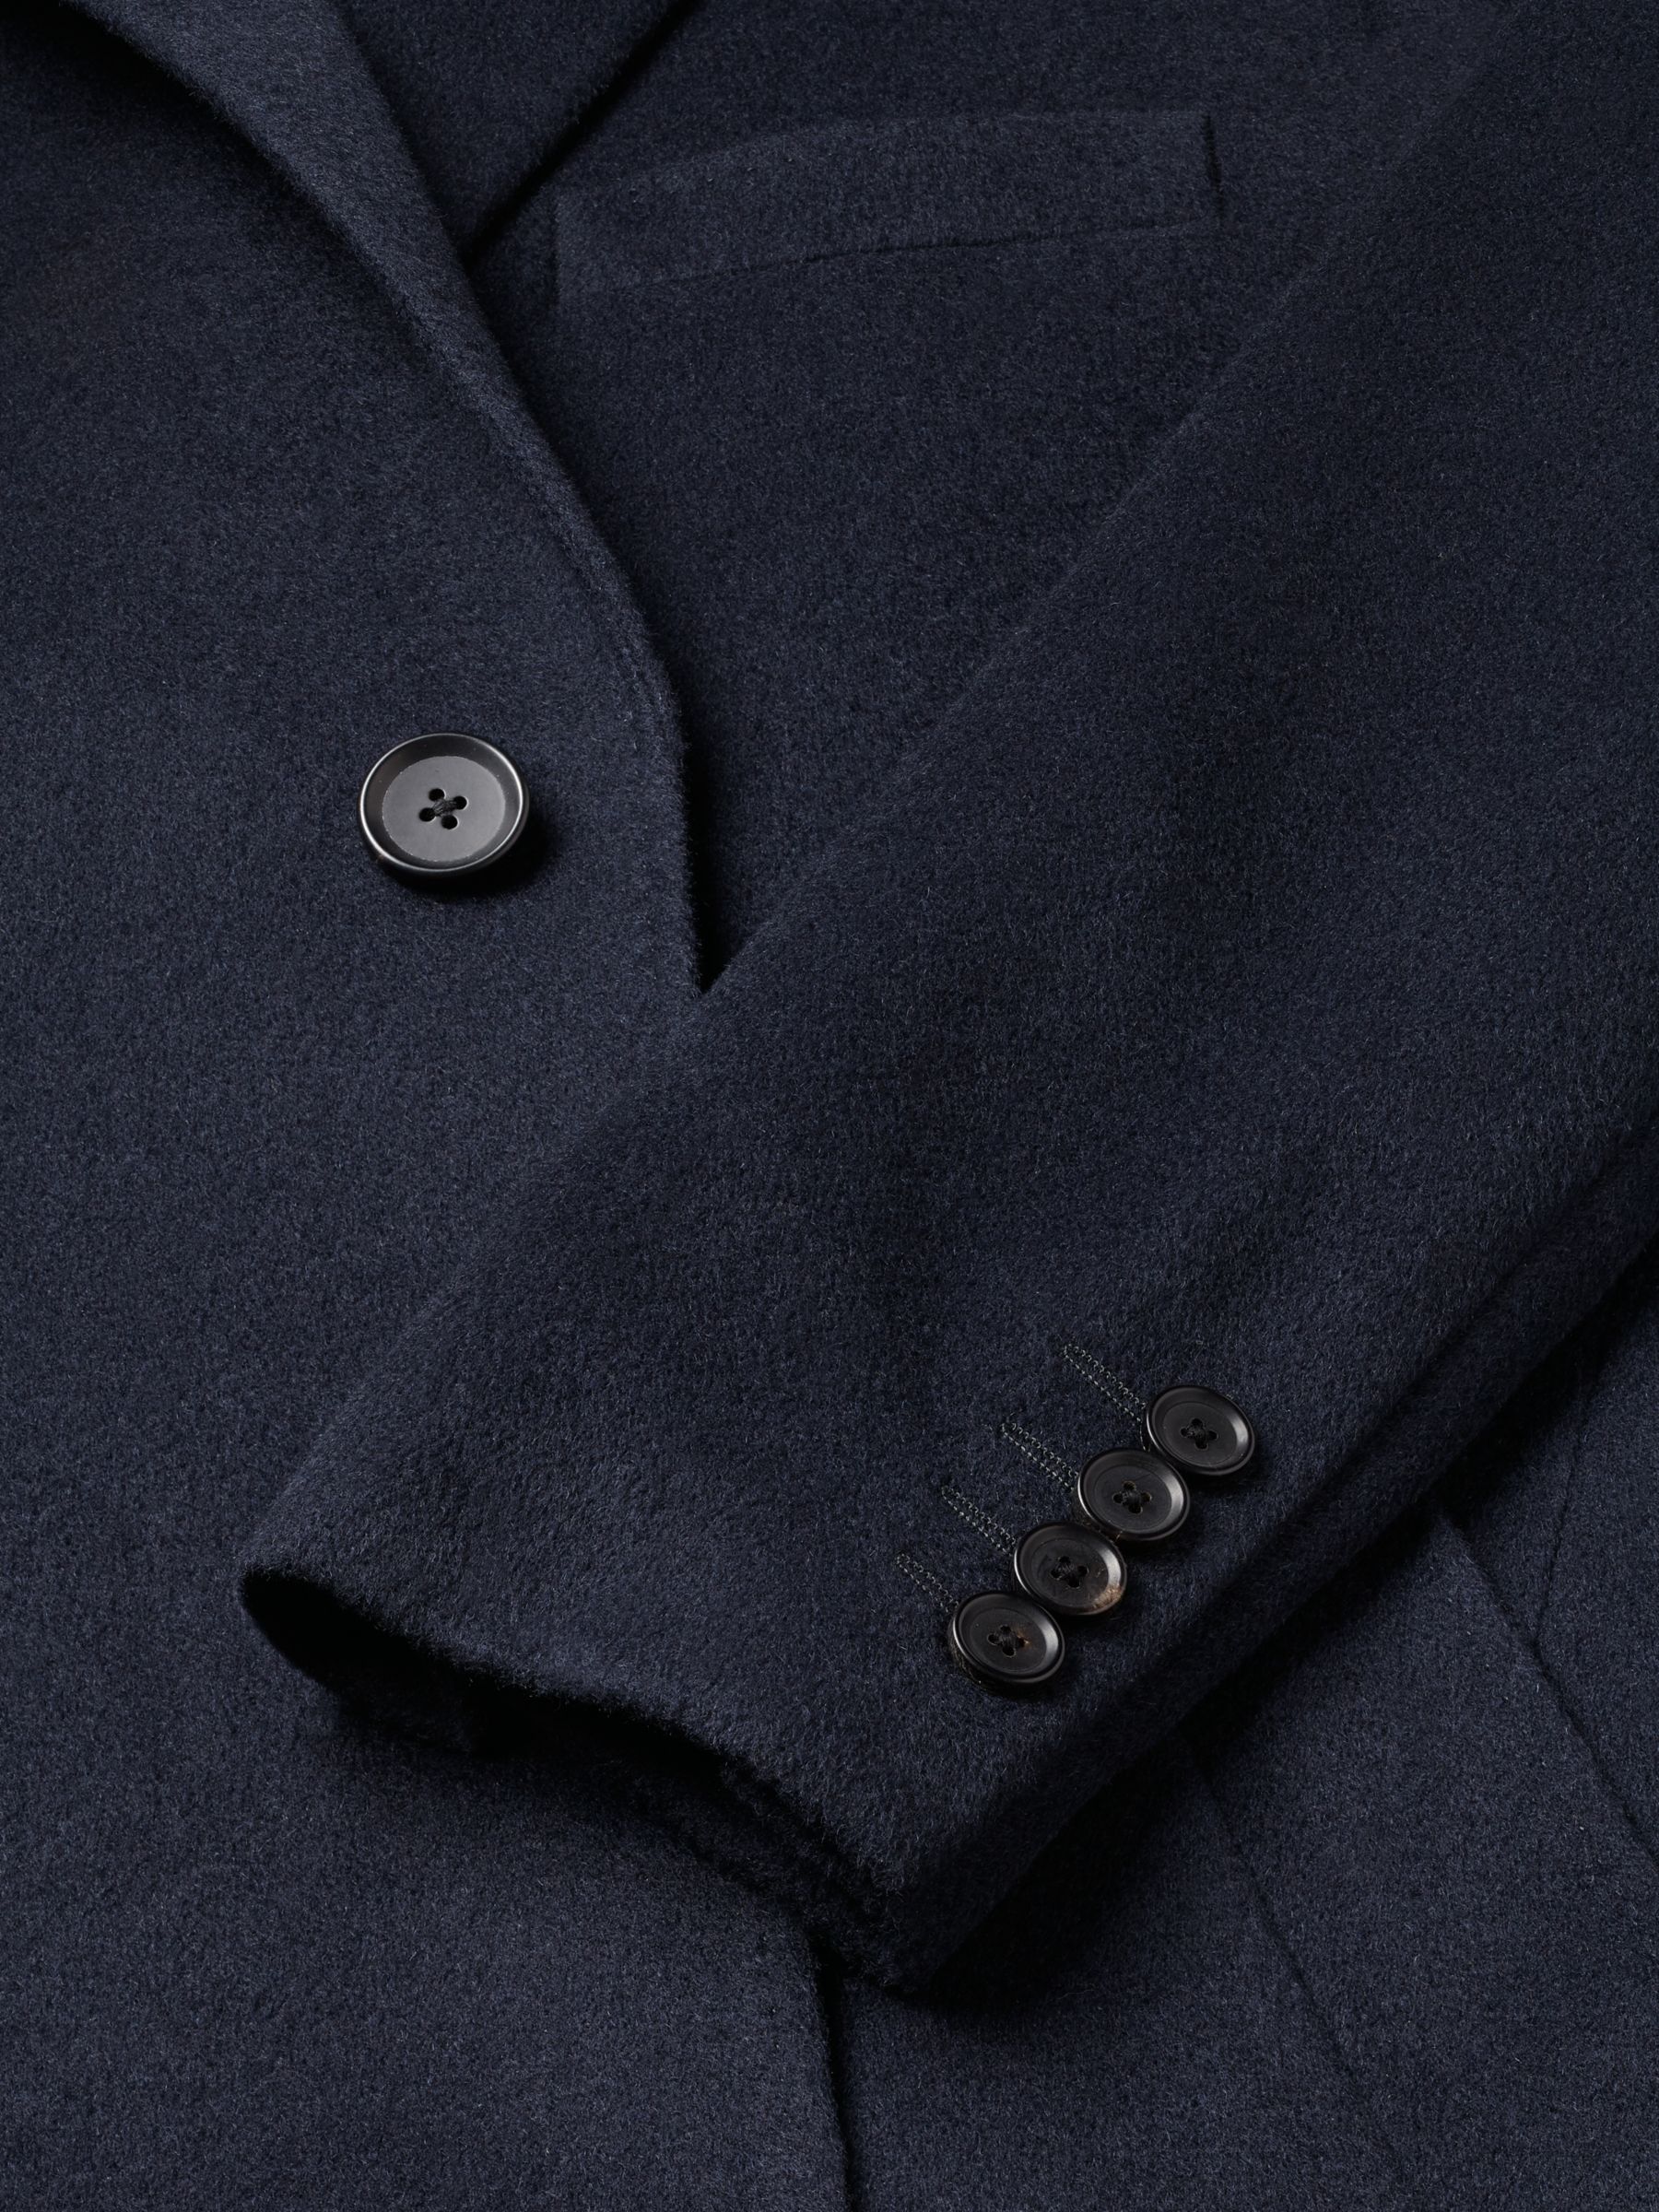 Charles Tyrwhitt Pure Wool Overcoat, Navy Blue at John Lewis & Partners